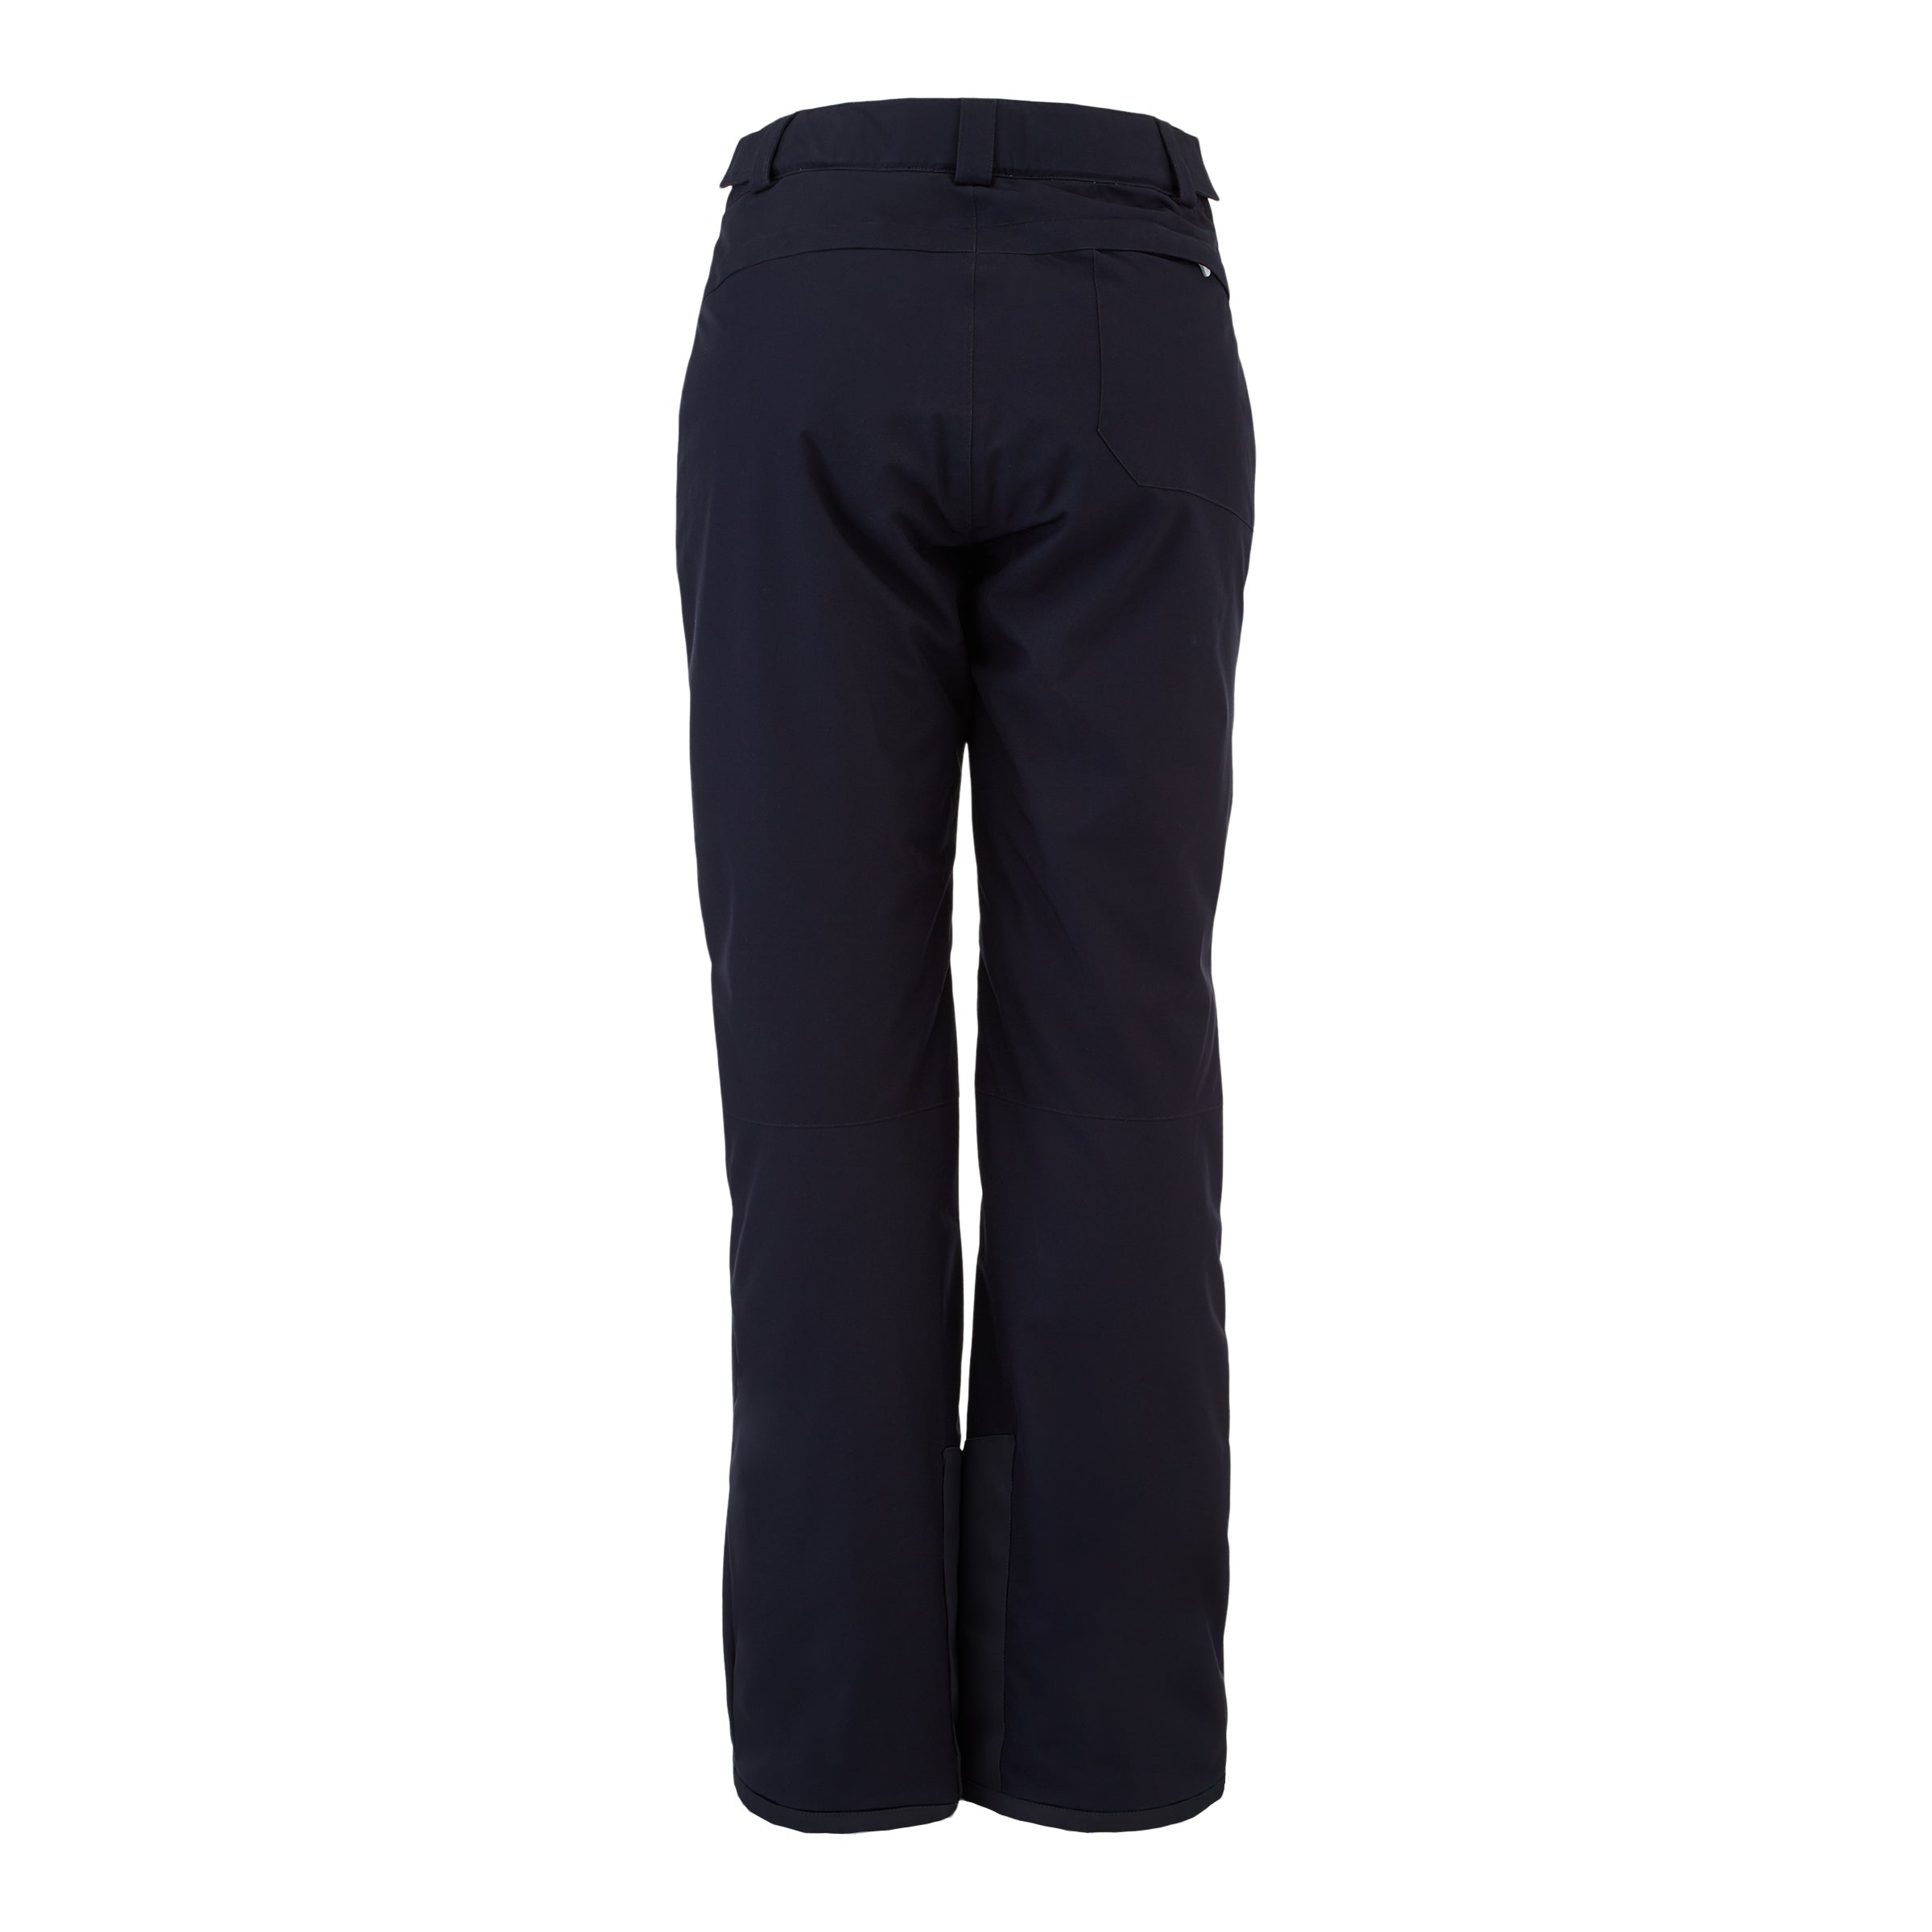 Item 803016 - Spyder Kaleidoscope - Women's Ski Pants - Size 6